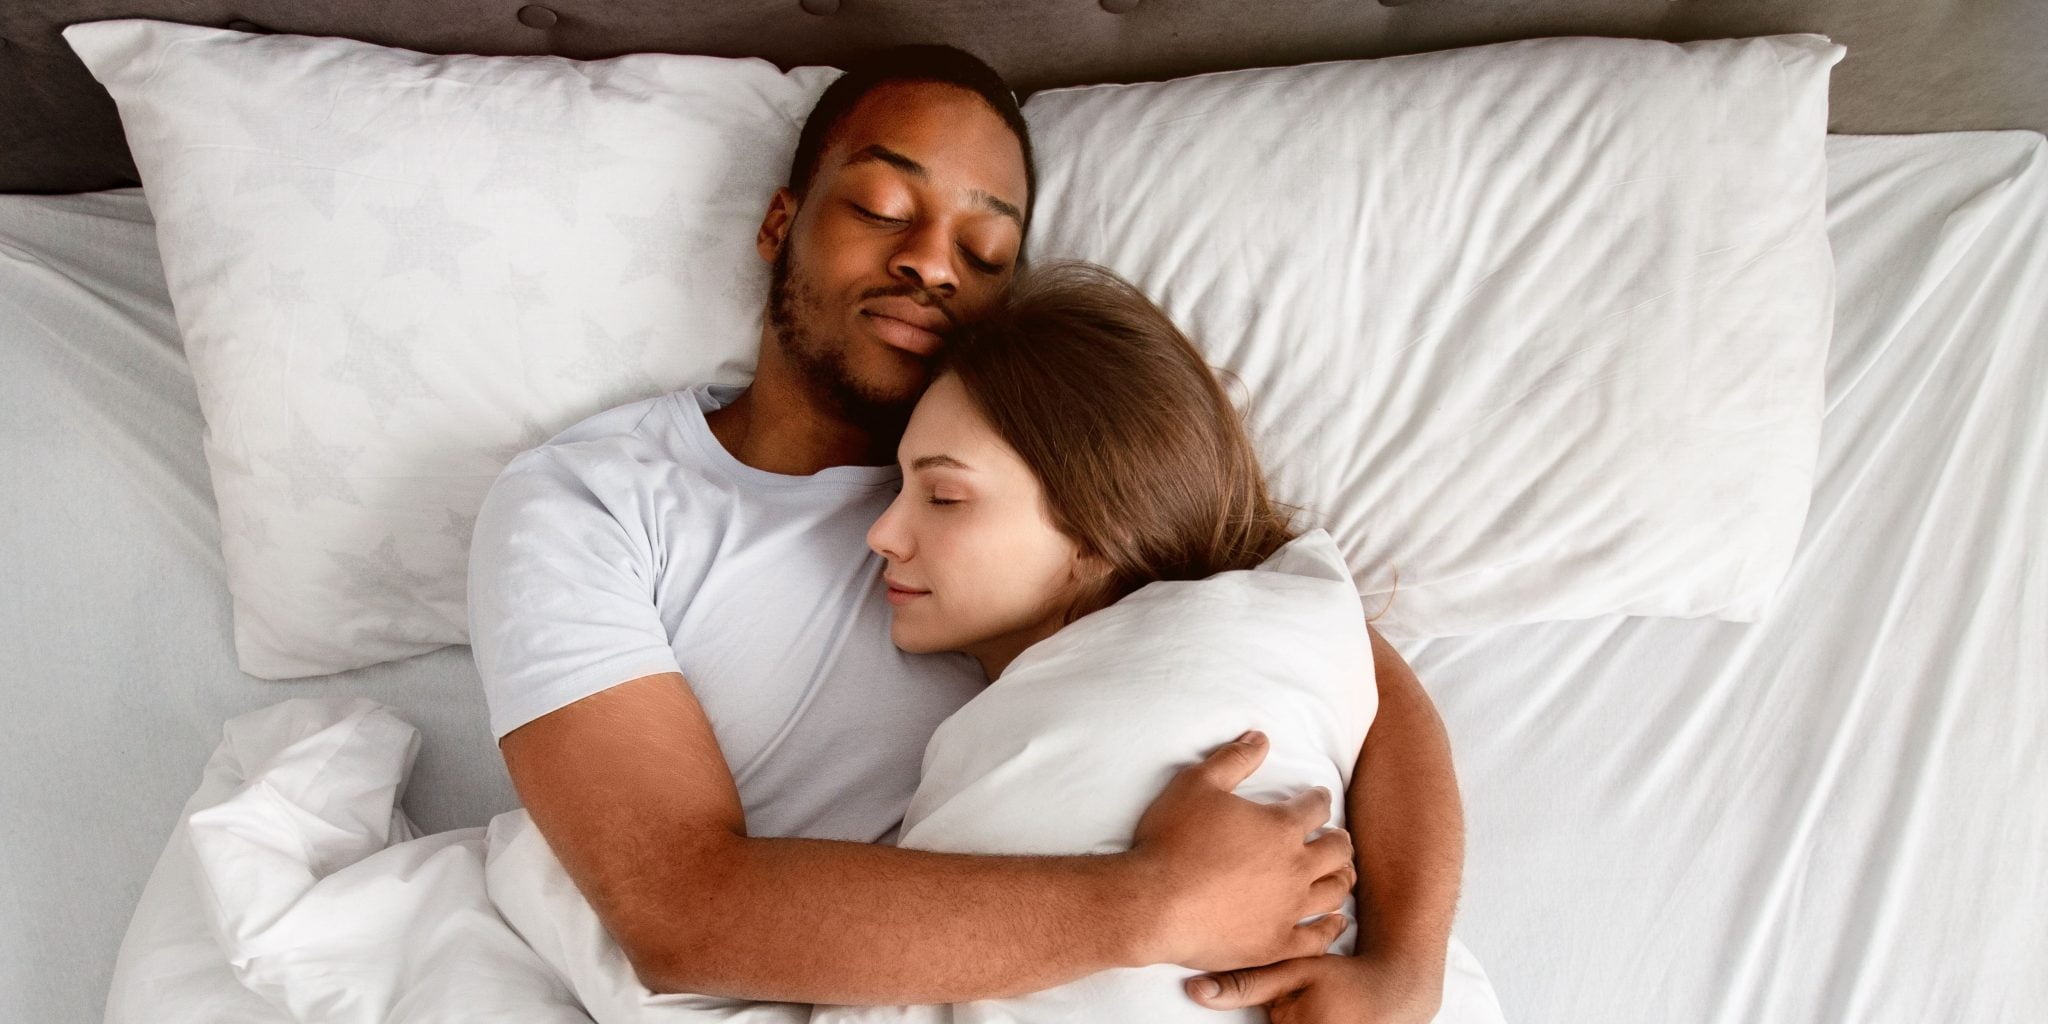 Is Your Partner Ruining Your Sleep?